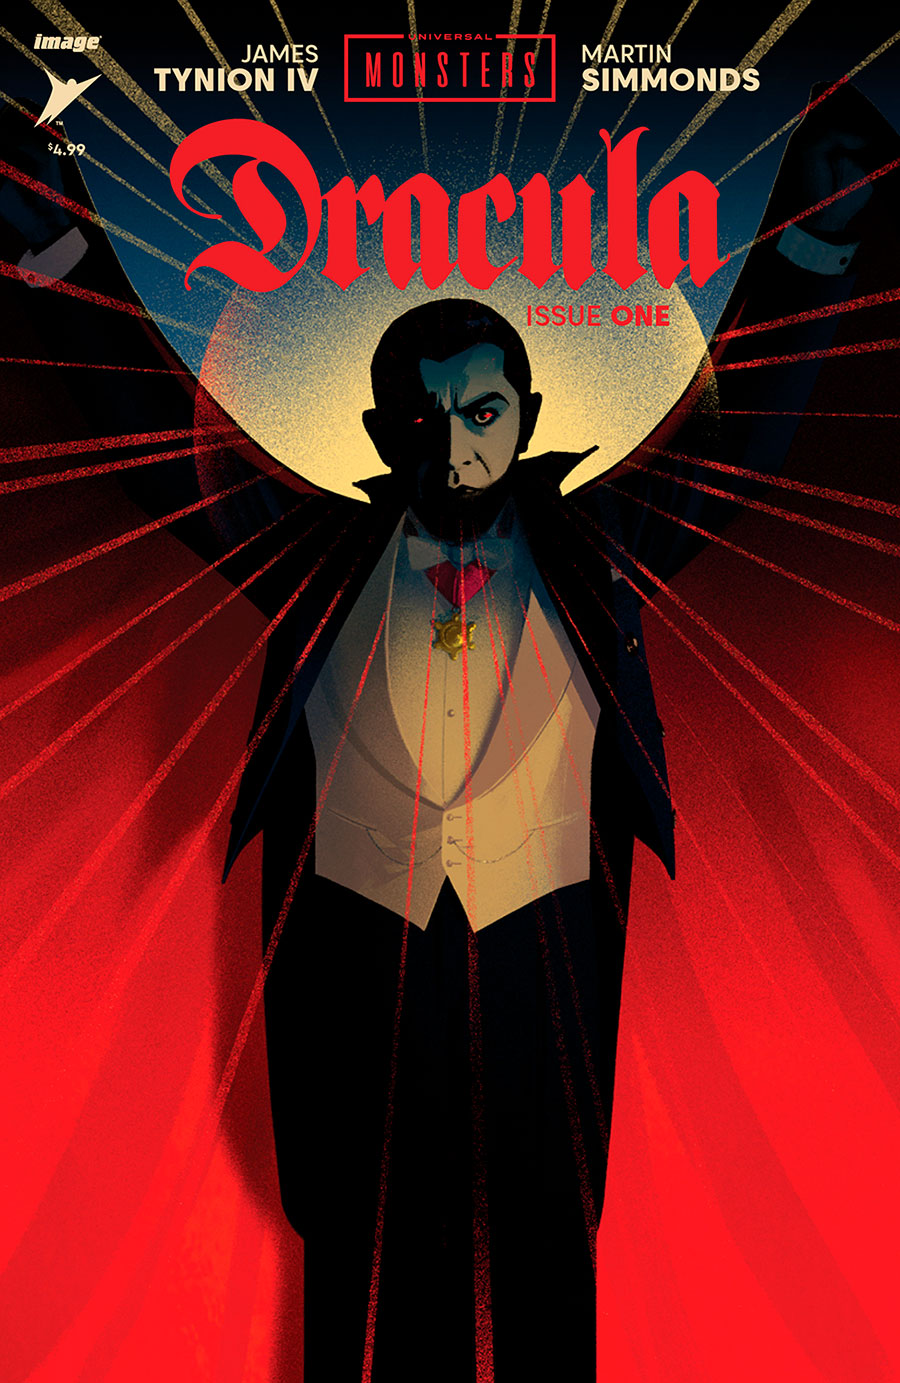 Universal Monsters Dracula #1 Cover B Variant Joshua Middleton Cover (Limit 1 Per Customer)